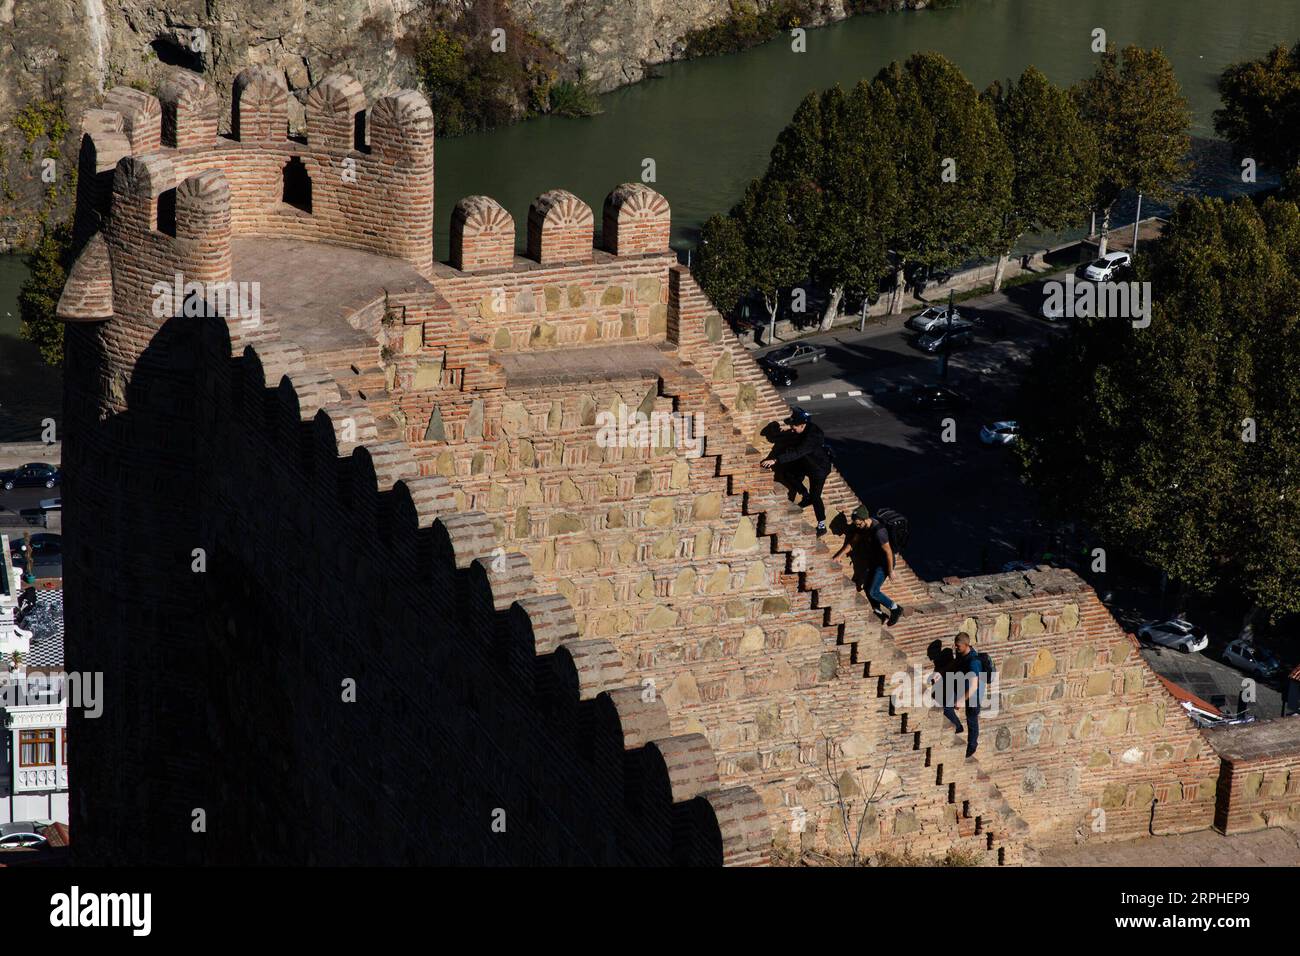 191106 -- TBILISI, Nov. 6, 2019 -- Tourists visit the Narikala Fortress in Tbilisi, capital of Geogria, on Nov. 6, 2019.  GEORGIA-TBILISI-SCENERY BaixXueqi PUBLICATIONxNOTxINxCHN Stock Photo